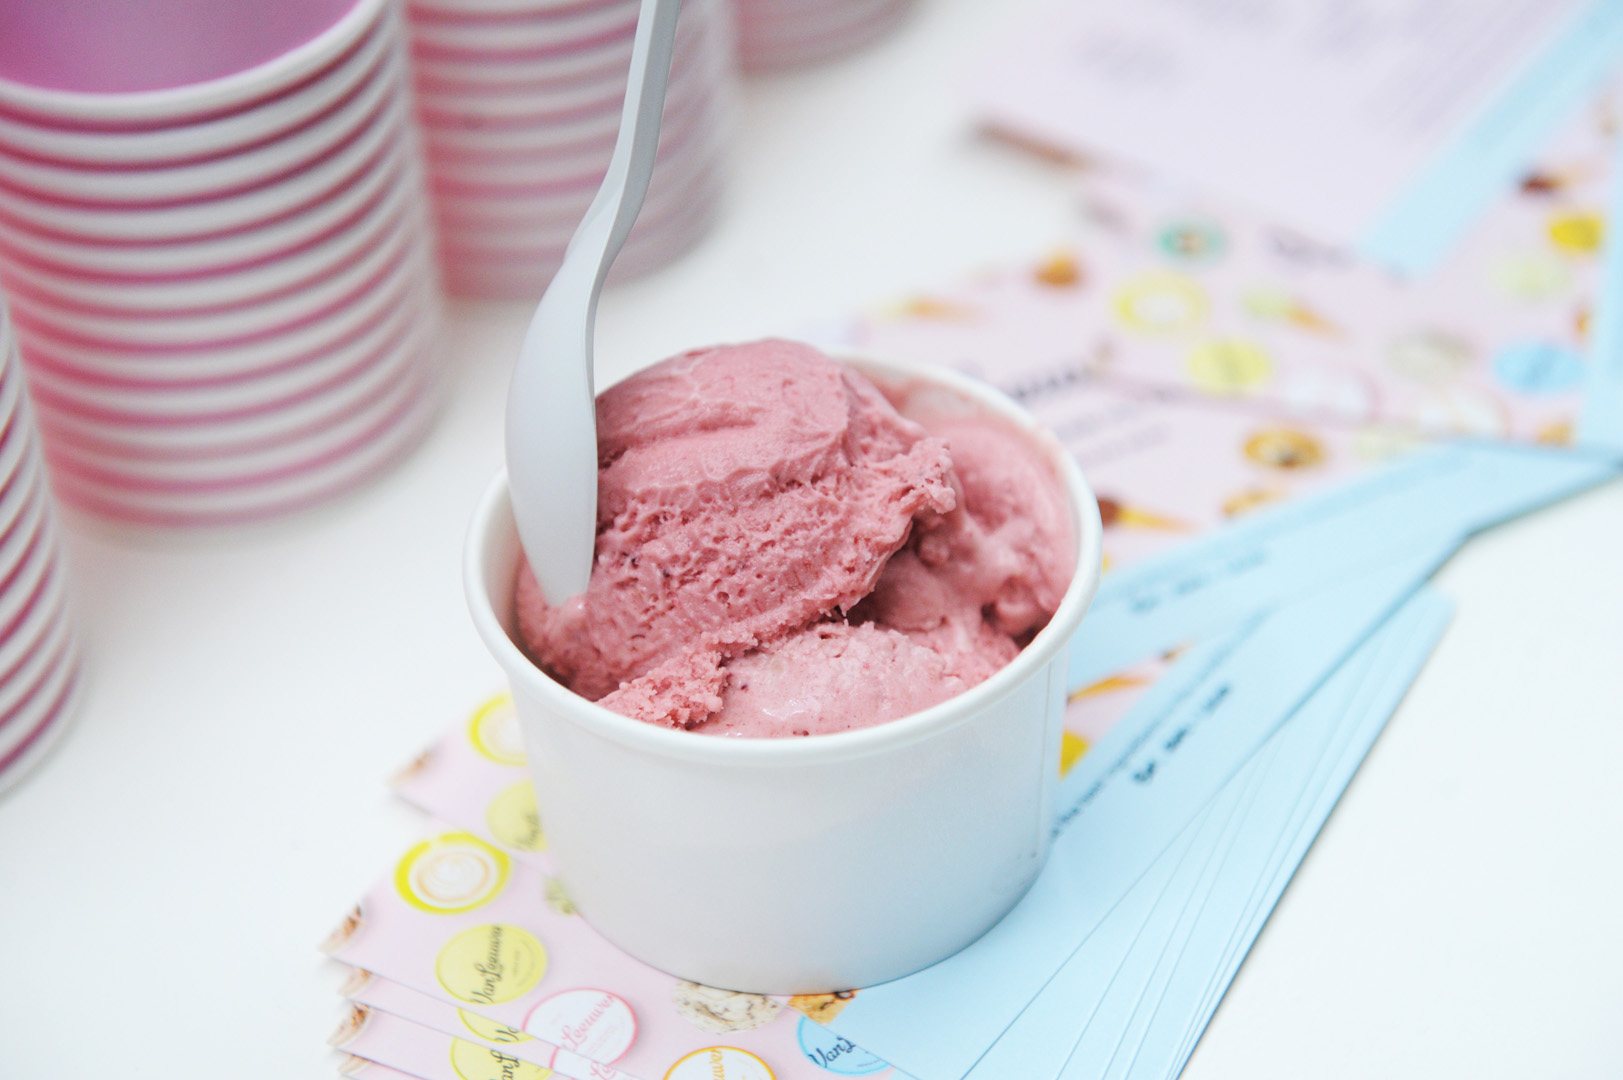 Strawberry Vegan ice cream from Van Leeuwen ice cream